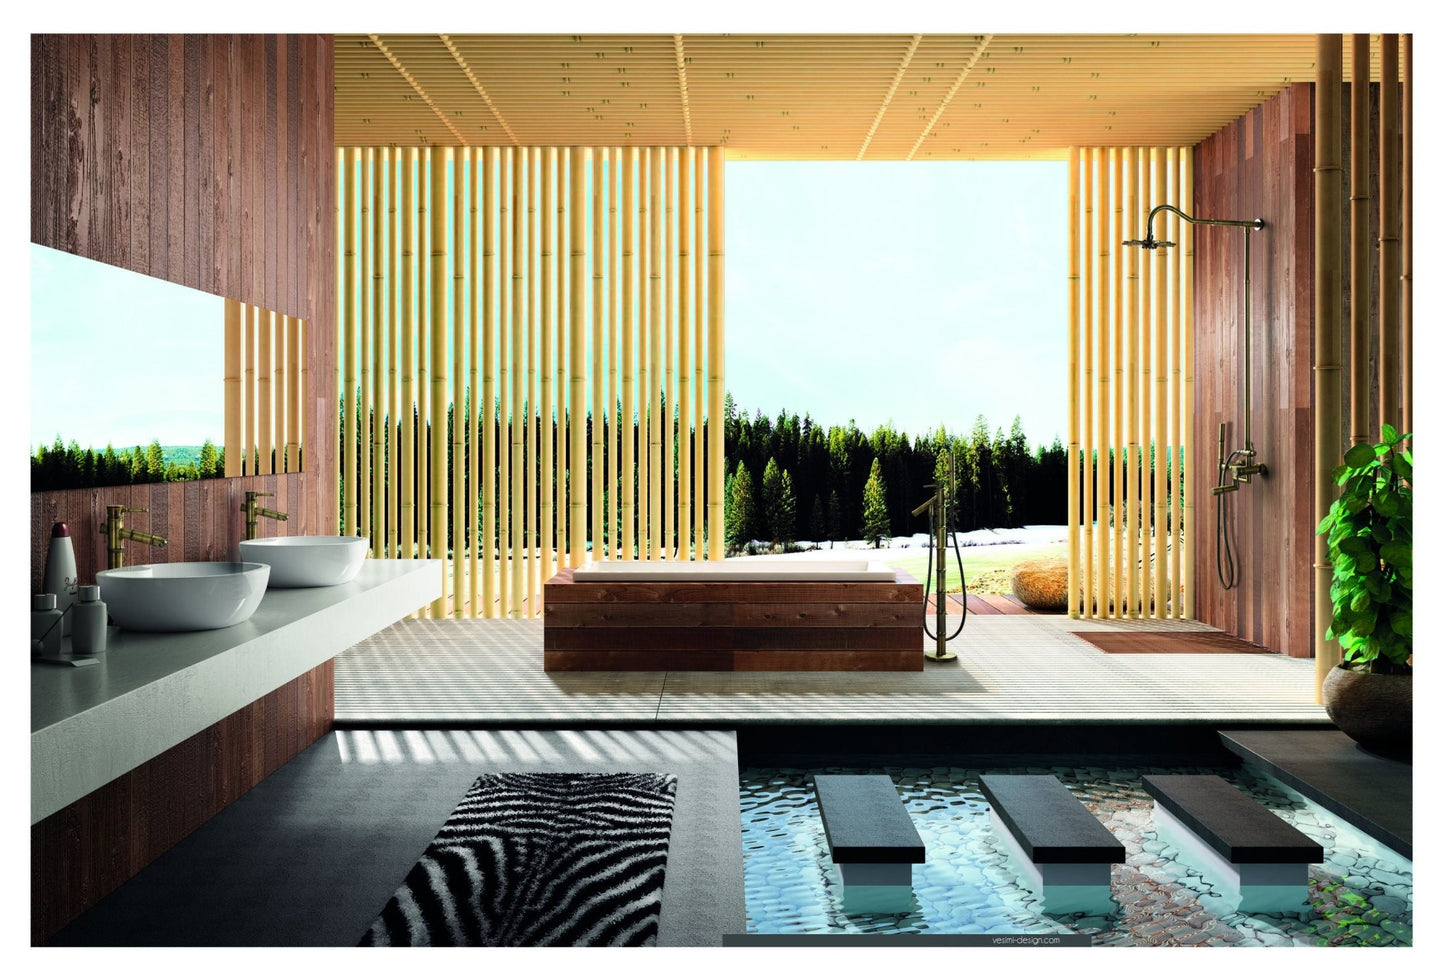 Bamboo Bronze Design Vessel Sink Faucet - |VESIMI Design| Luxury and Rustic bathrooms online